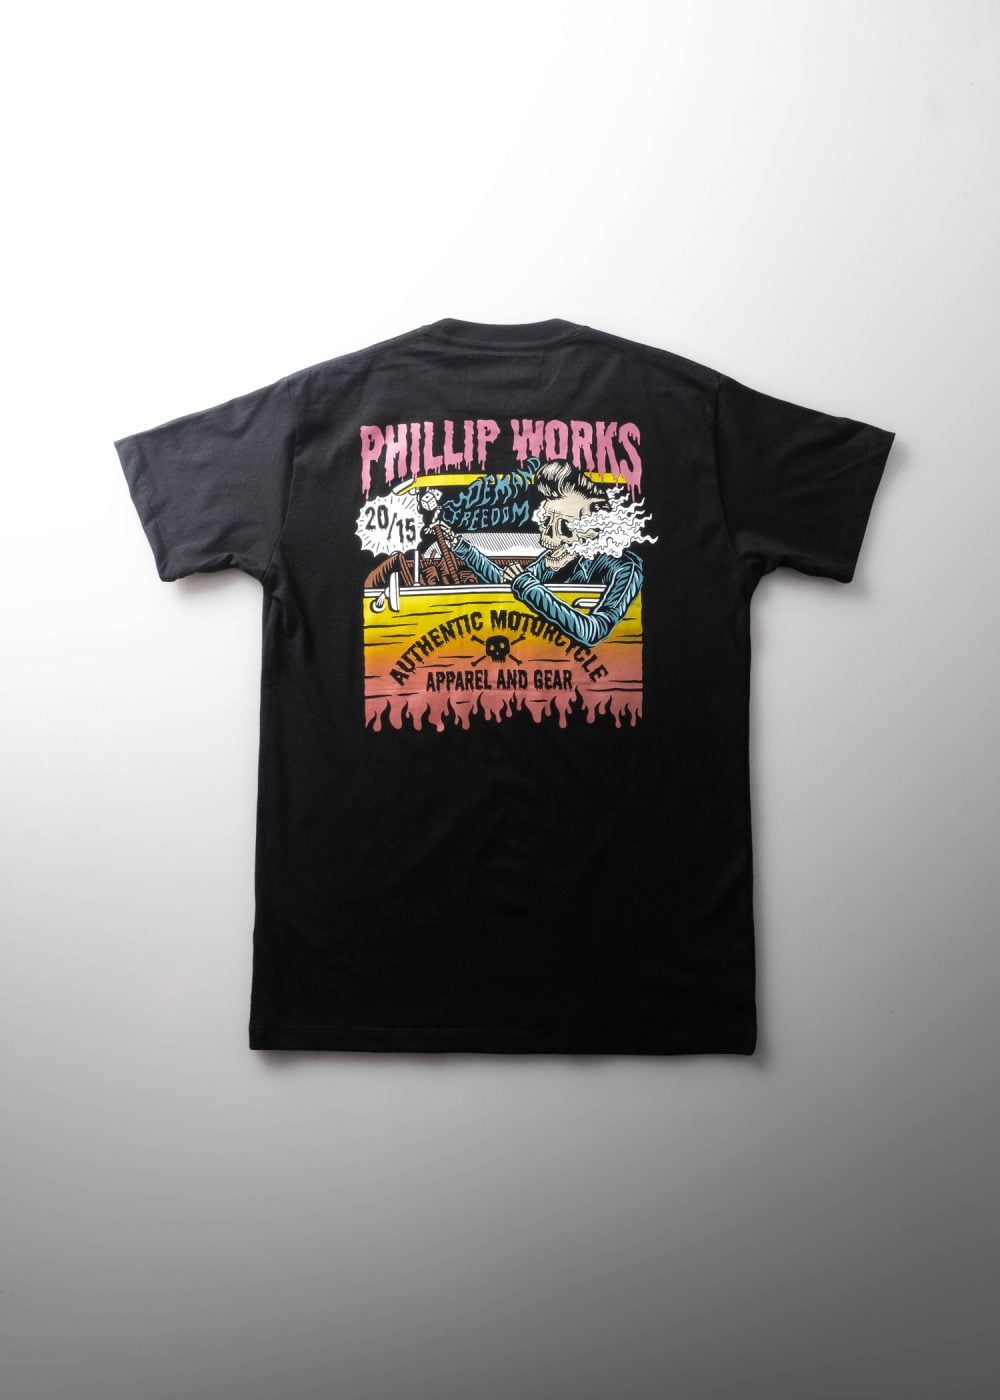 SKULL JUNKIES - Phillip Works